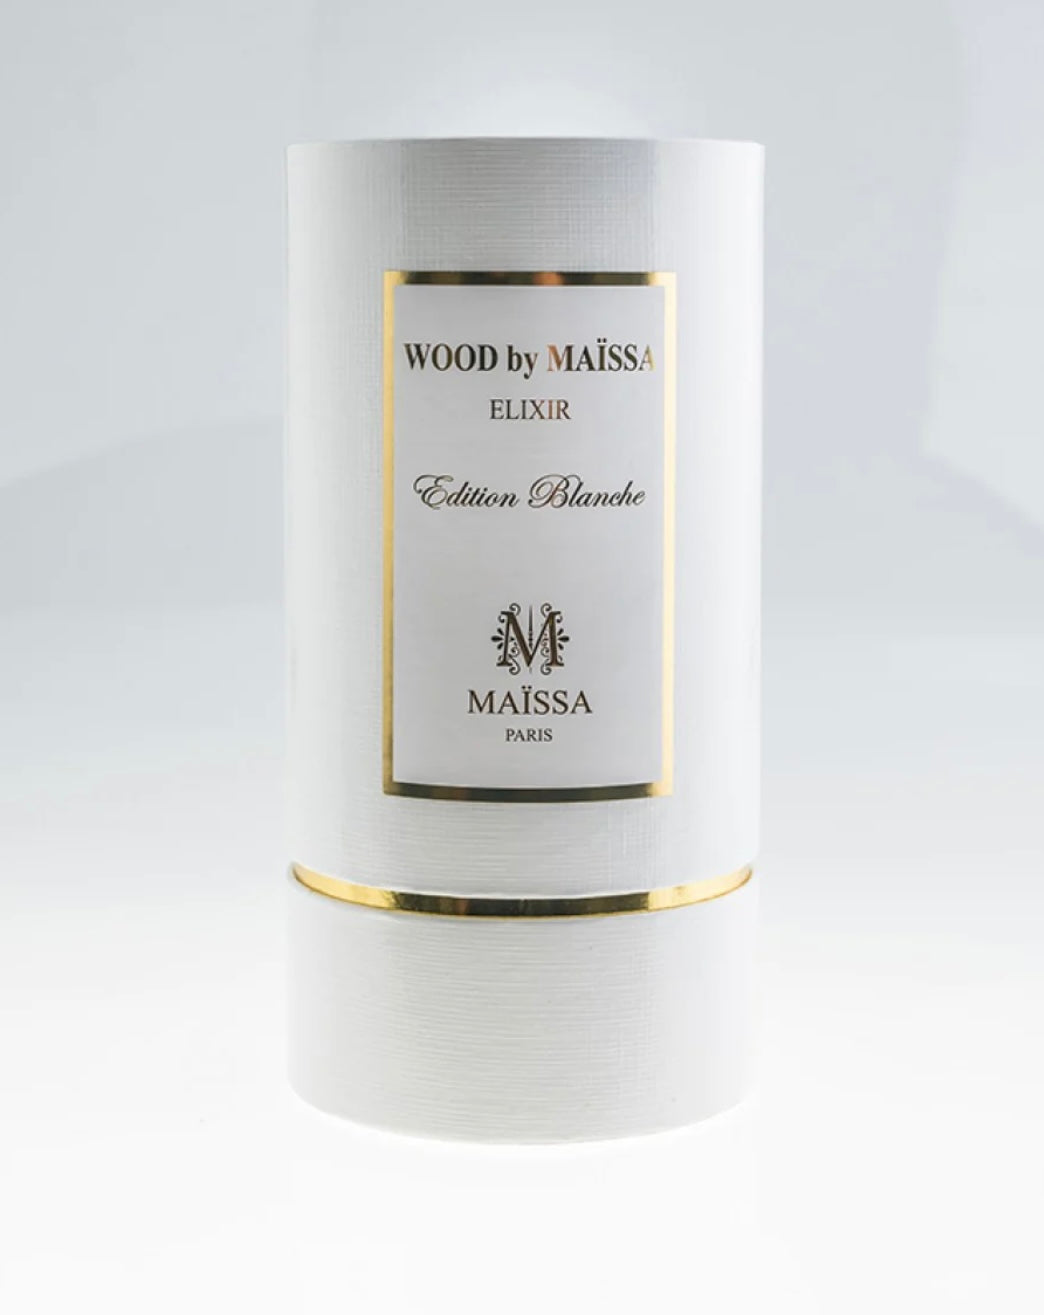 Maissa Paris Wood luxury fragrance